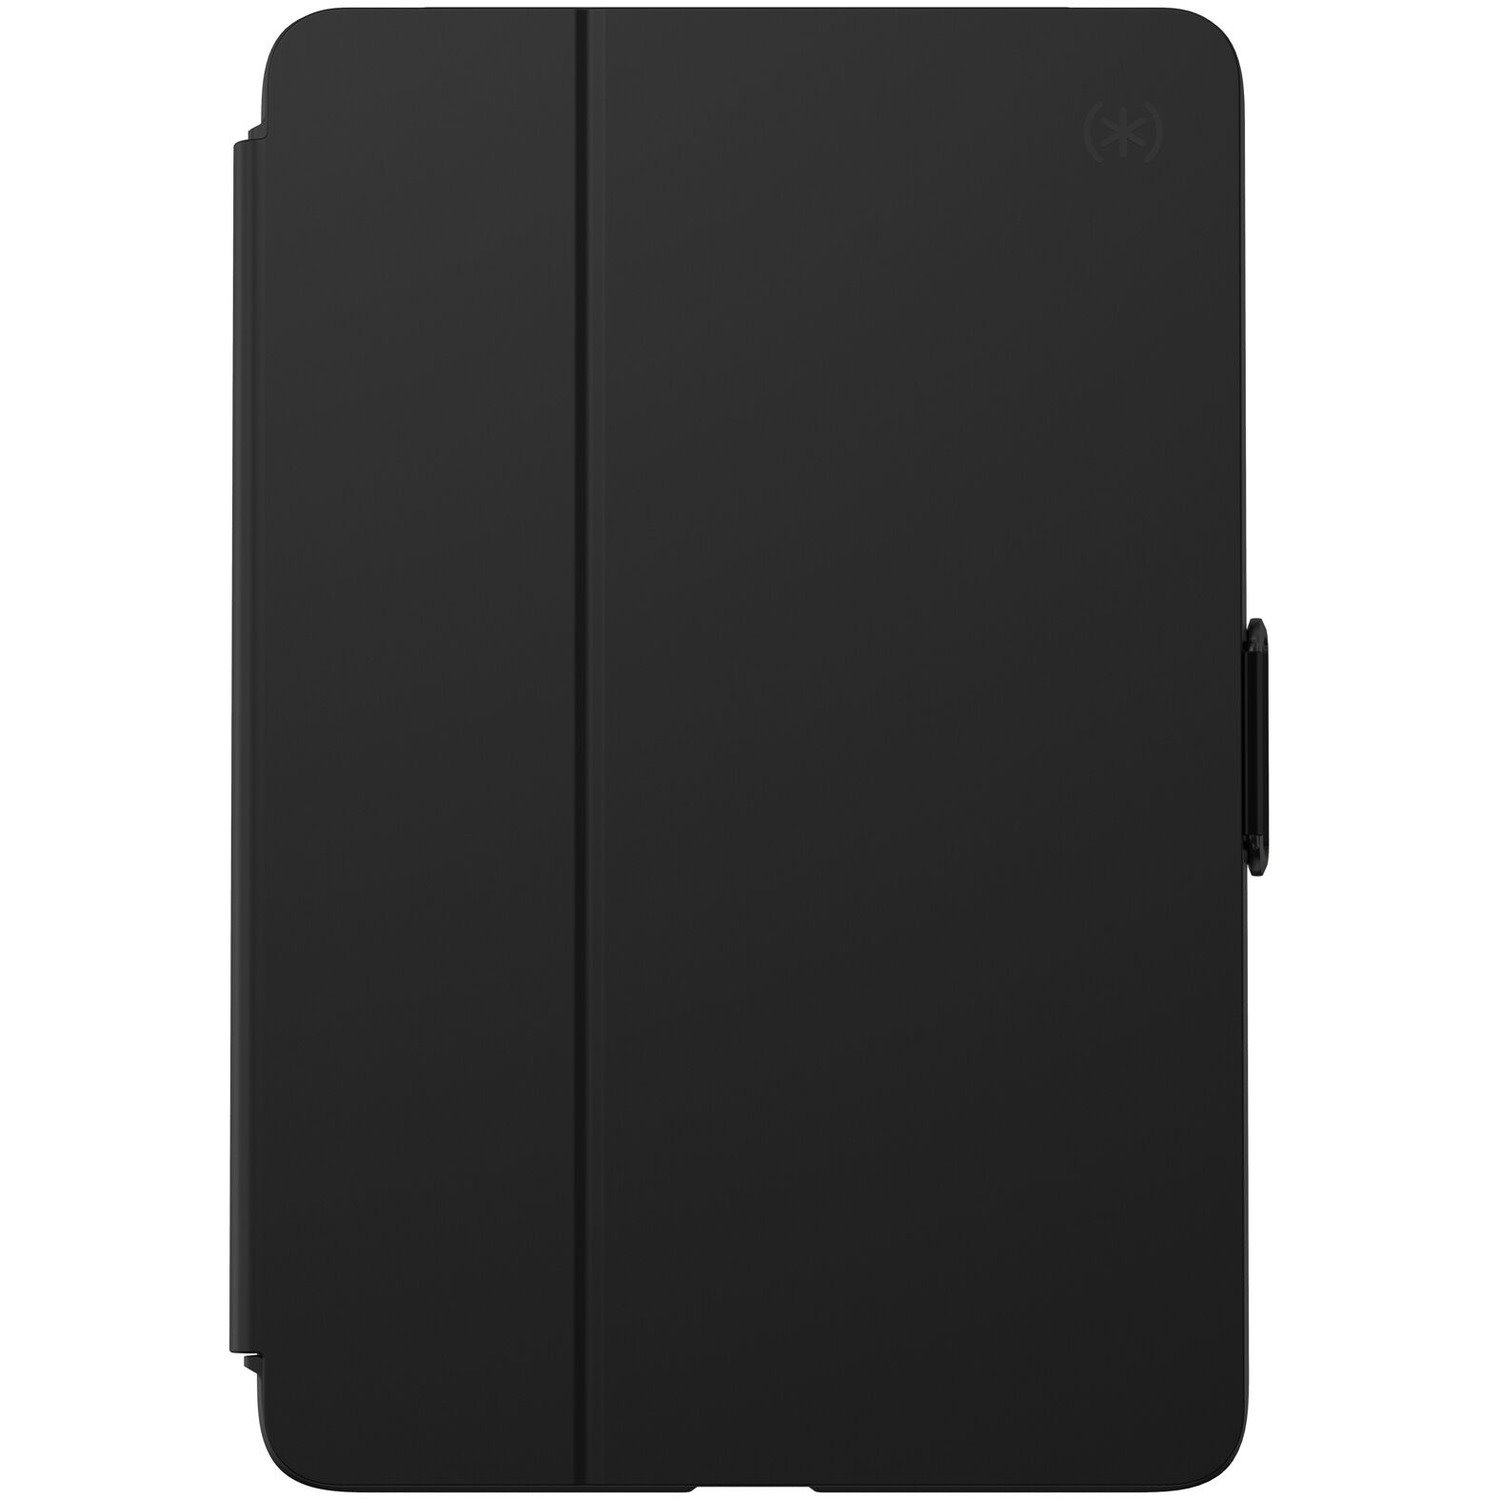 Speck Balance FOLIO Carrying Case (Folio) Apple iPad mini Tablet - Black